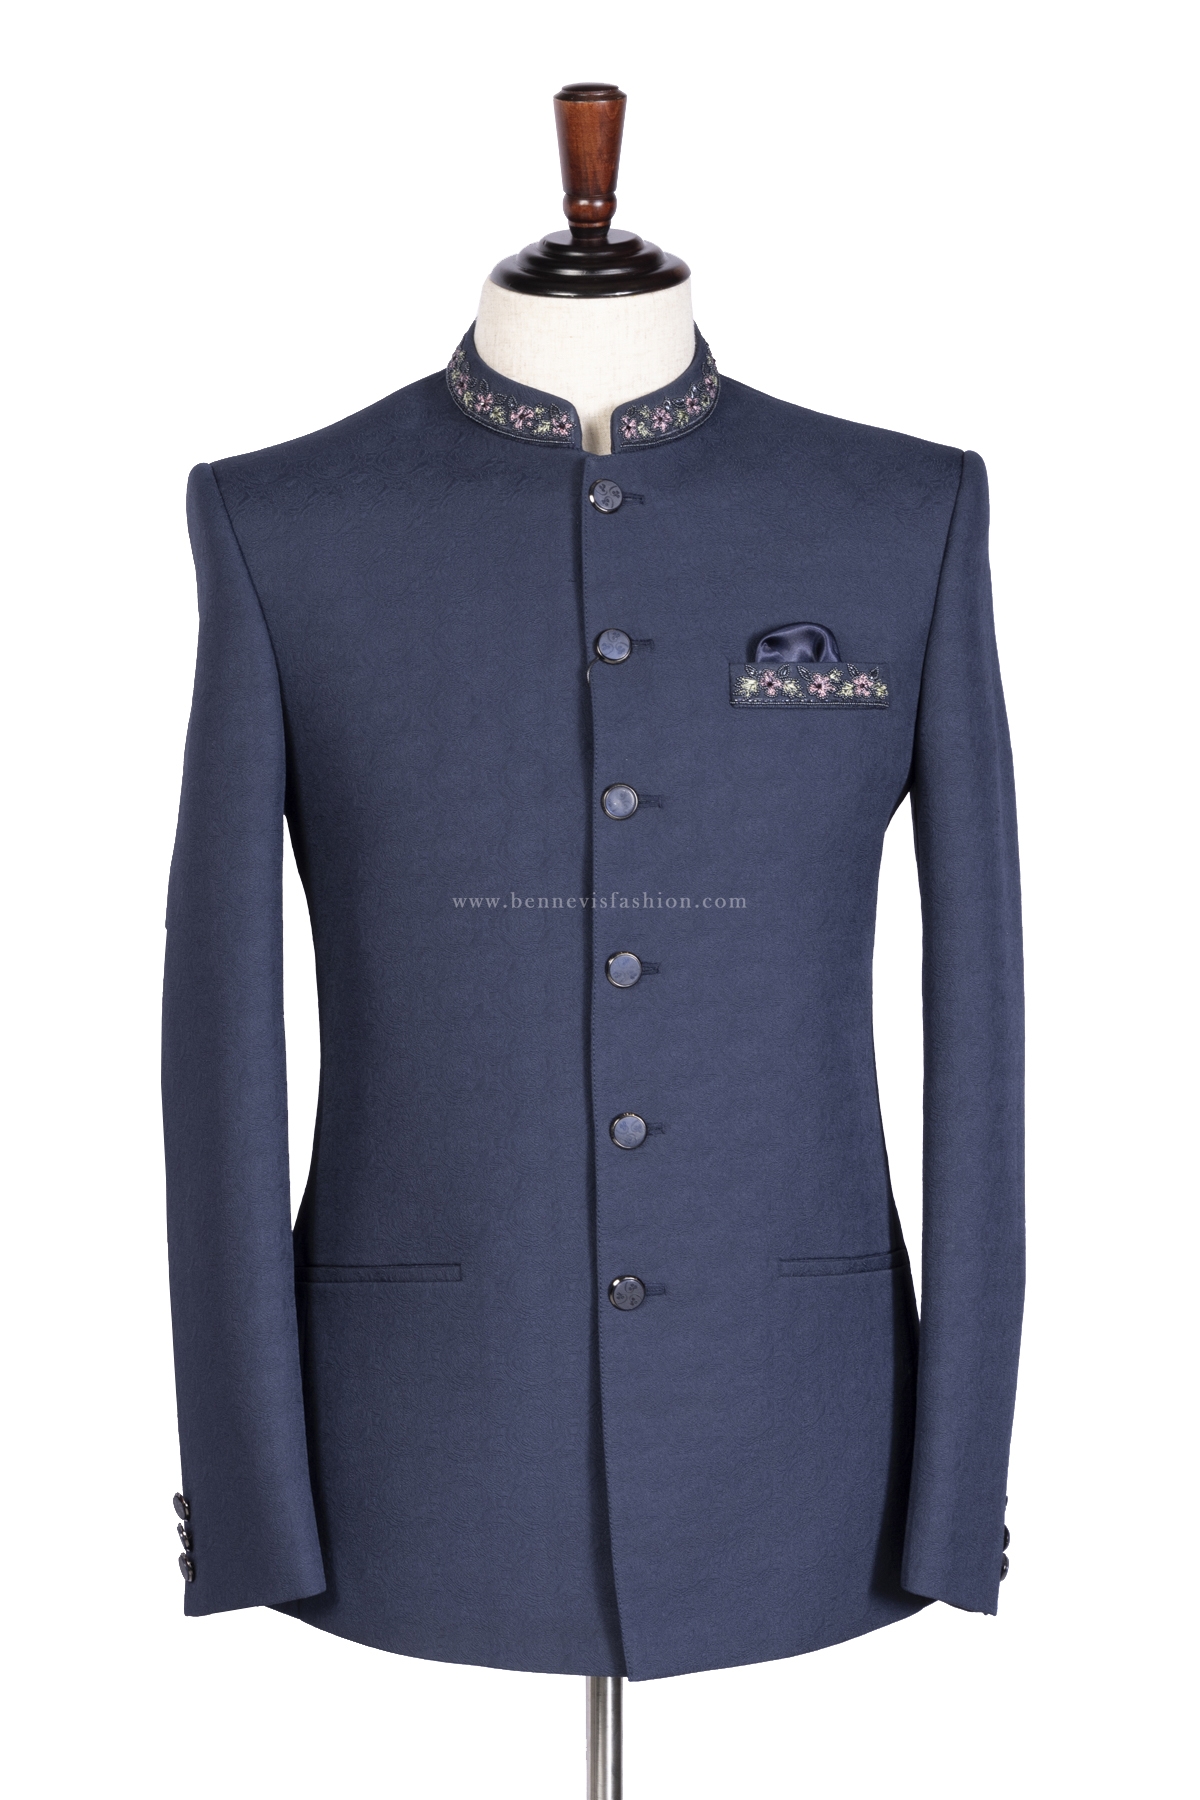 Buy Vastraas New Stylish Ethnic Traditional Navy Blue Designer Jodhpuri  Bandhgala Suit for Men With Pant. Online in India - Etsy | Groom dress men,  Wedding suits men, Wedding outfit men